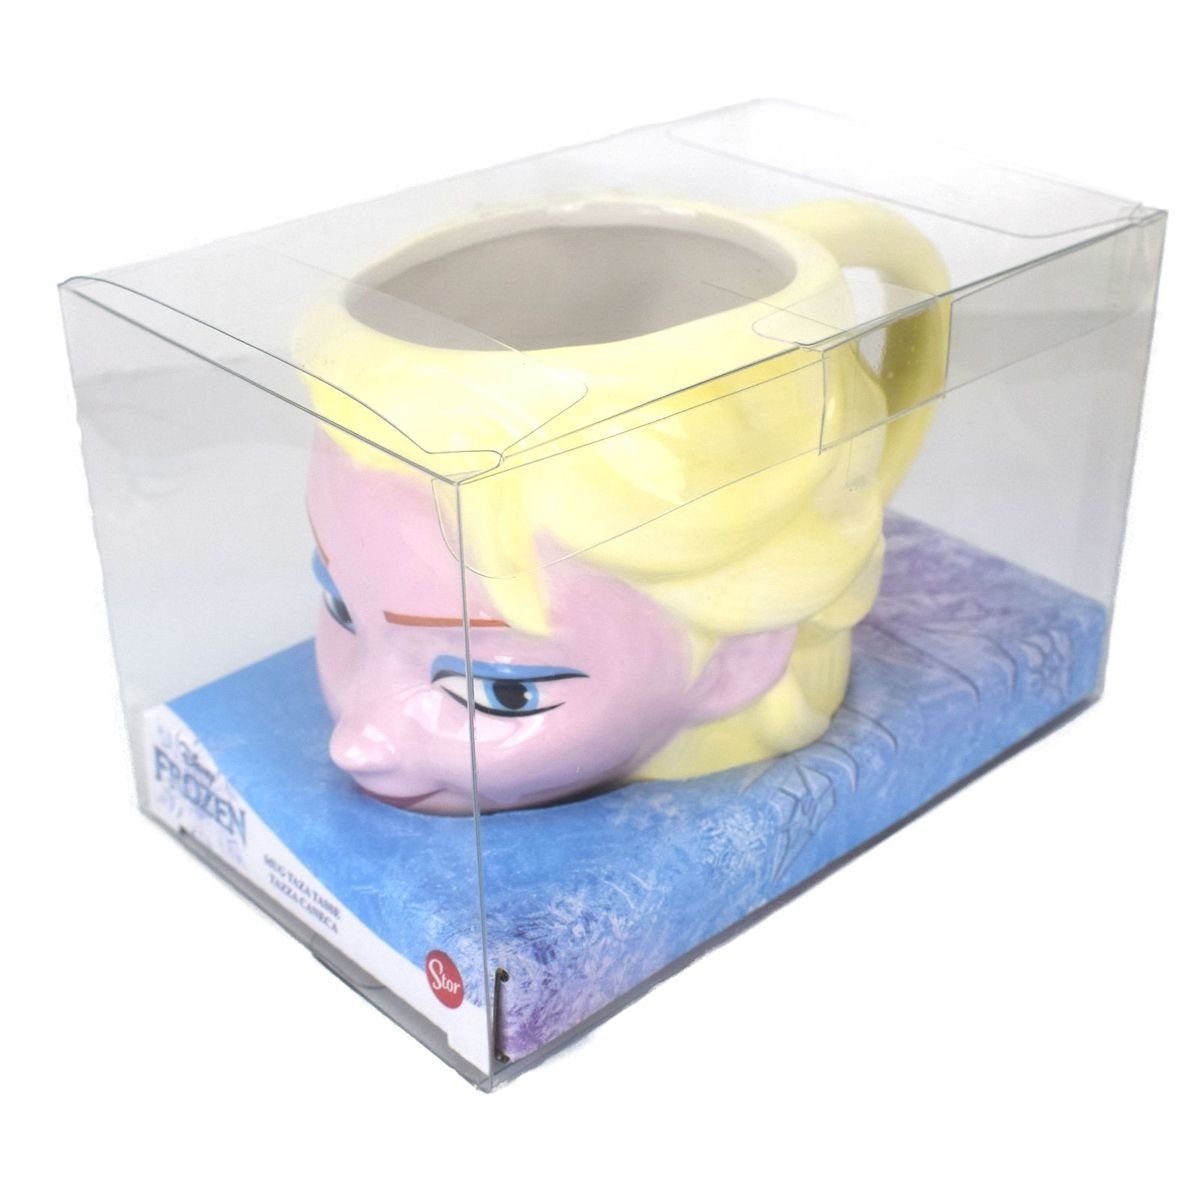 Stor Tasse Motivtasse Keramiktasse Kopf Elsa 3D Disneys Frozen mit Geschenkbox, Keramik, Geschenkbox